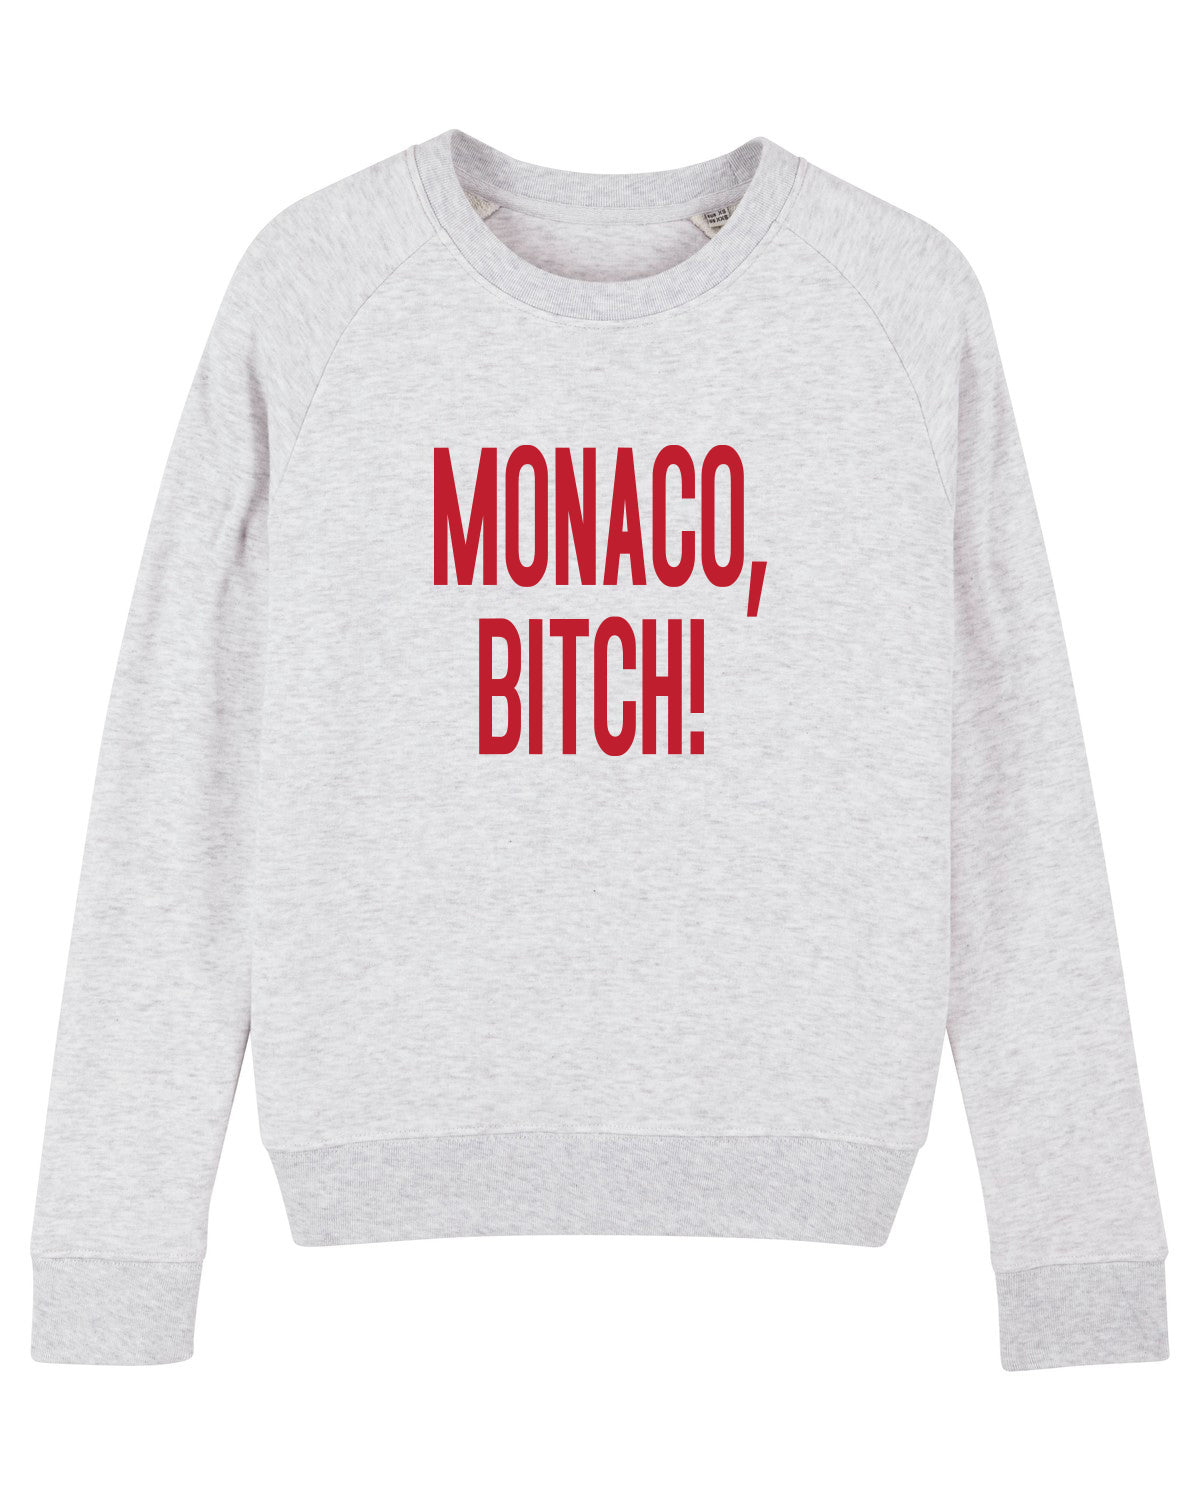 Sweater MONACO, BITCH